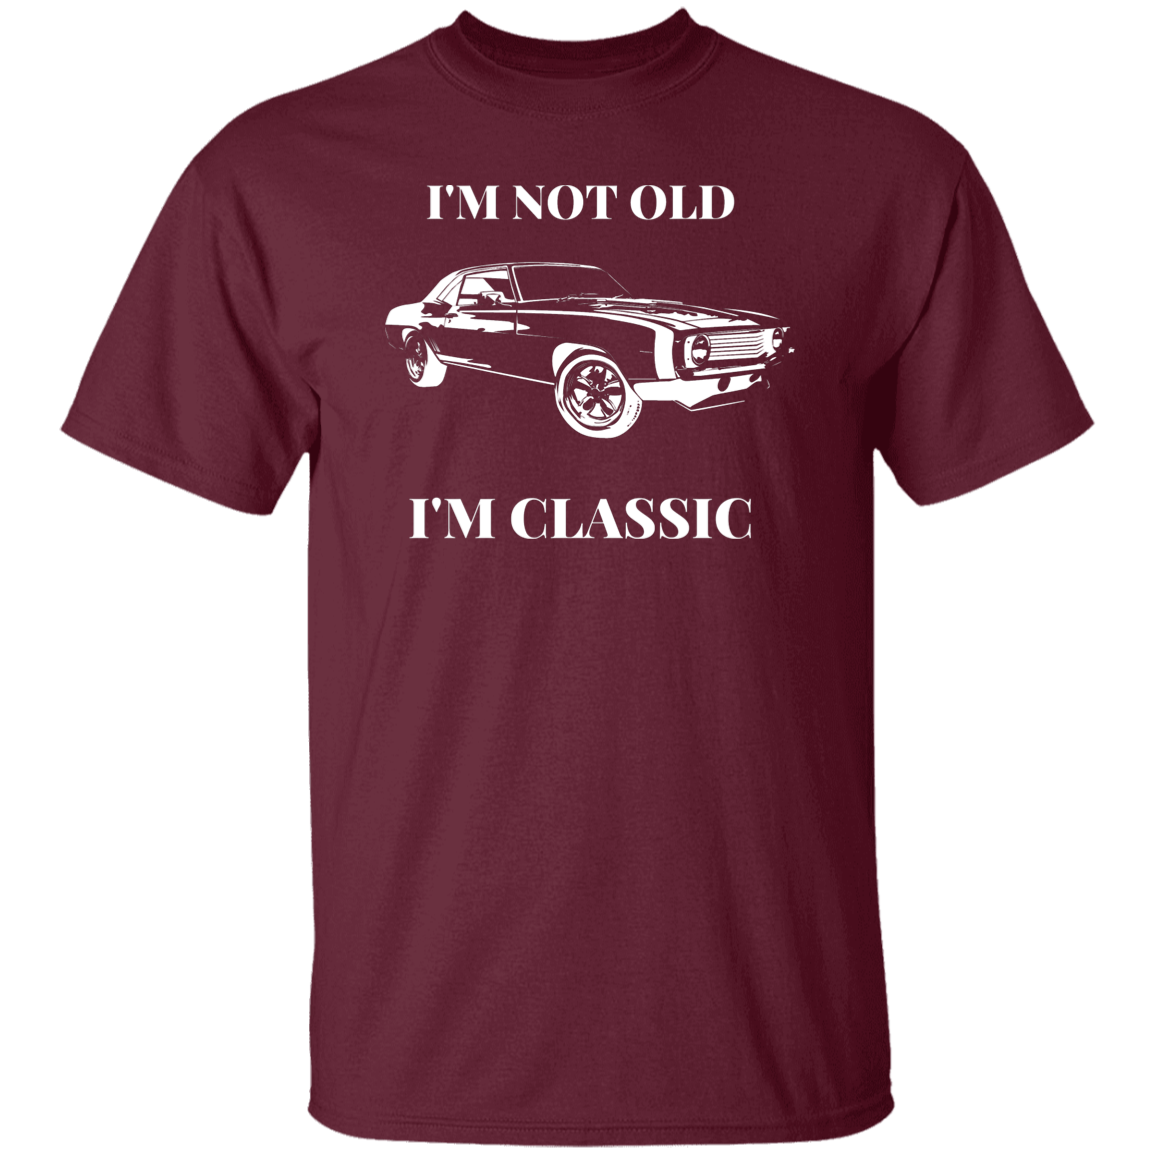 I'M A CLASSIC 5.3 oz. T-Shirt